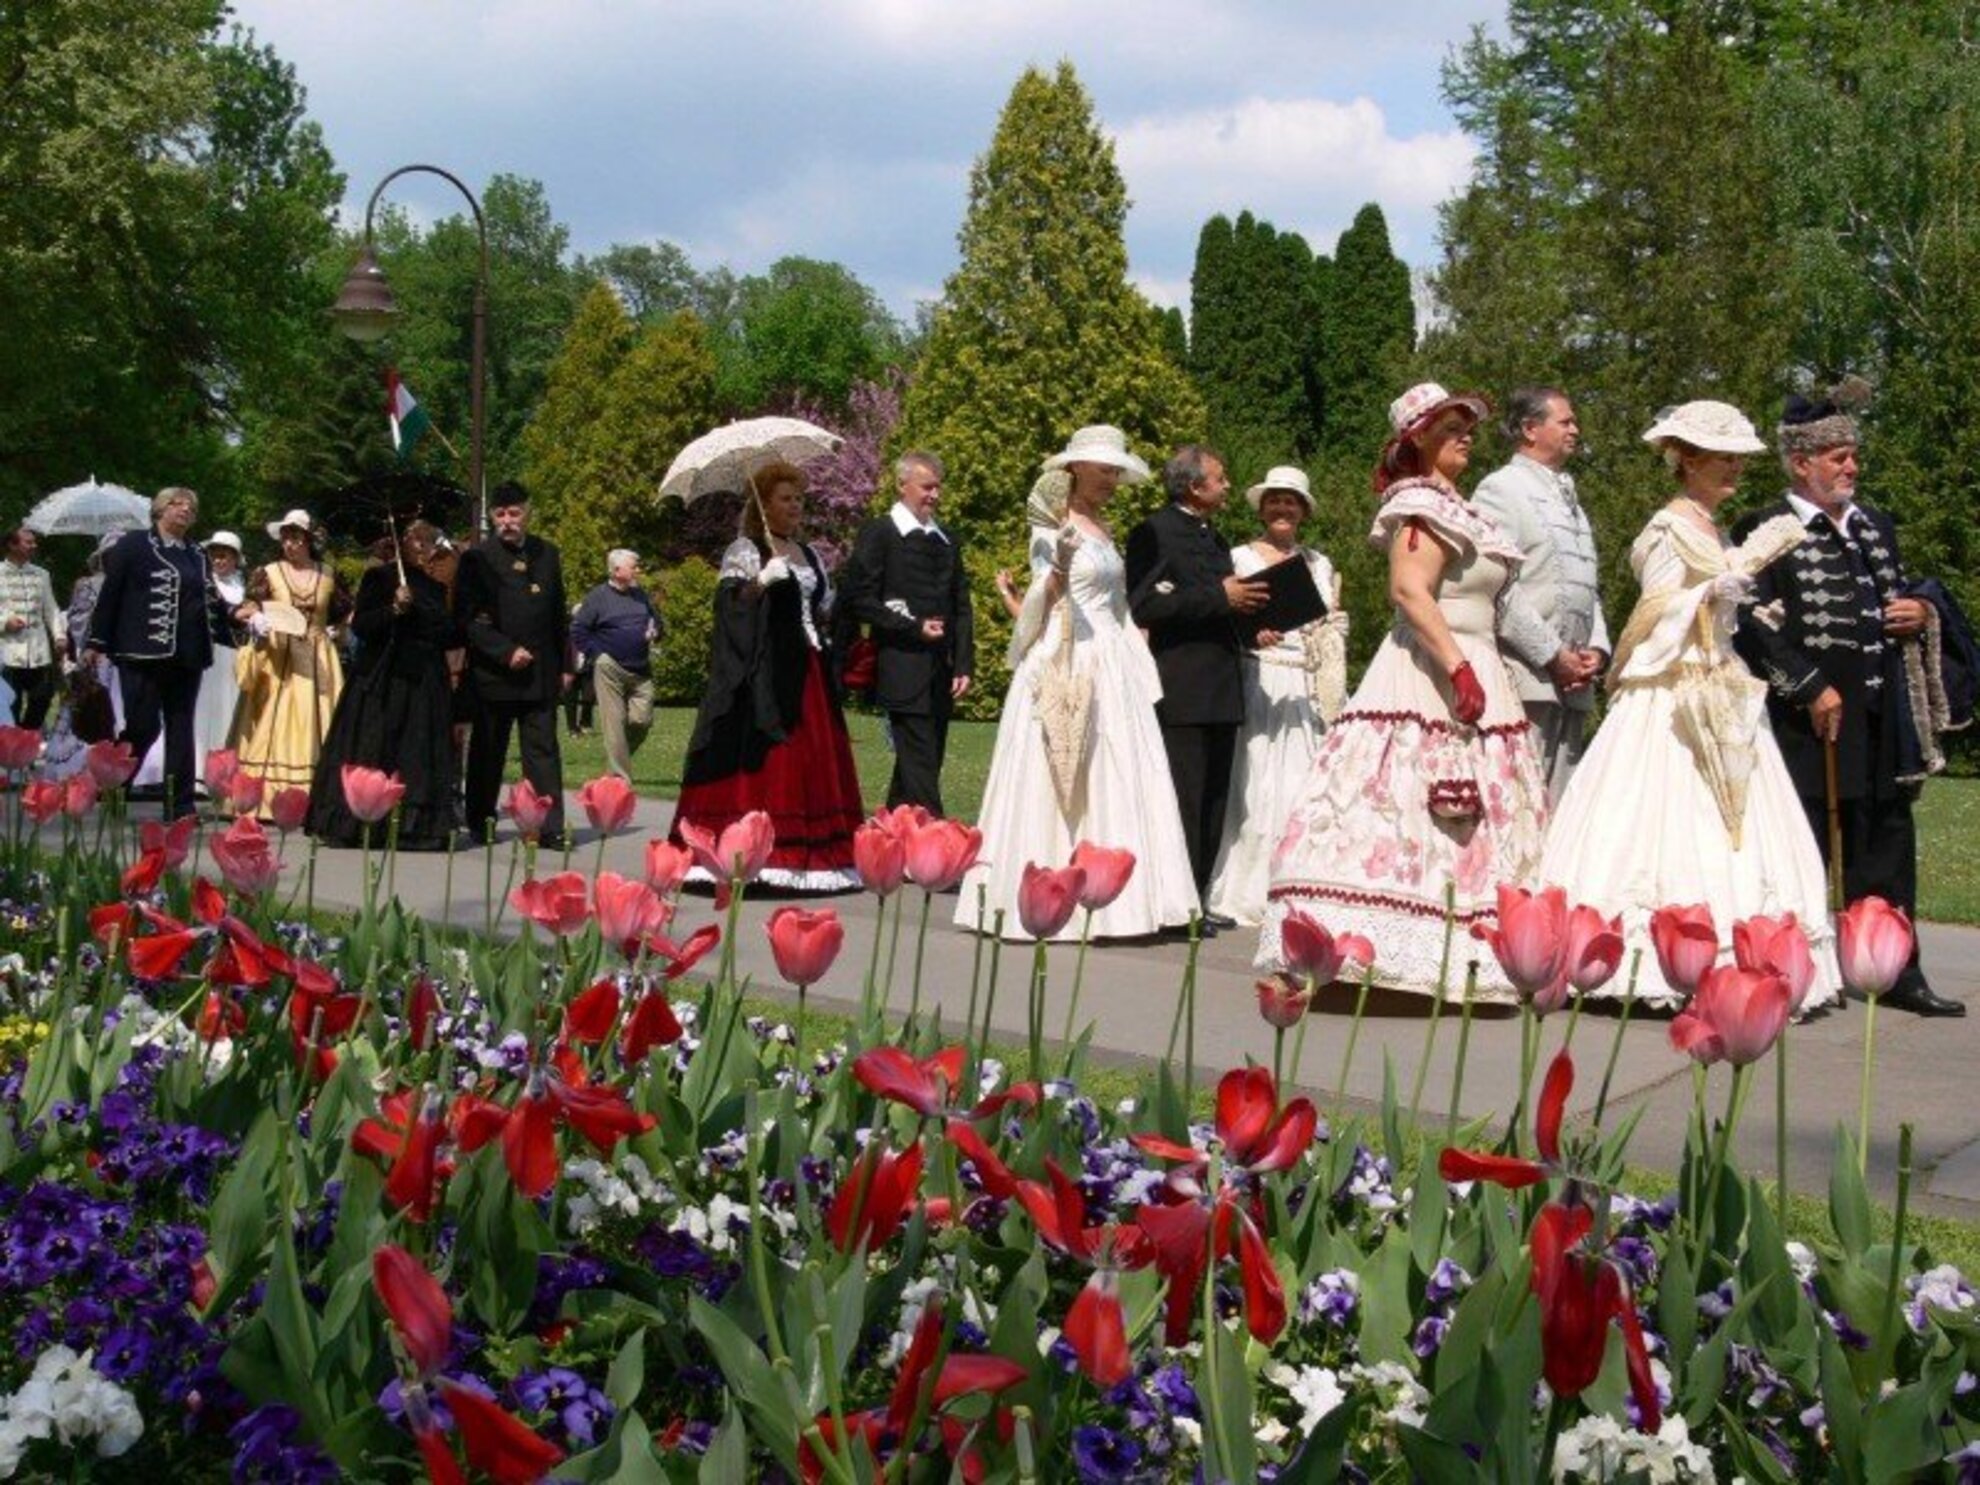 The Romantic 19th Century Festival